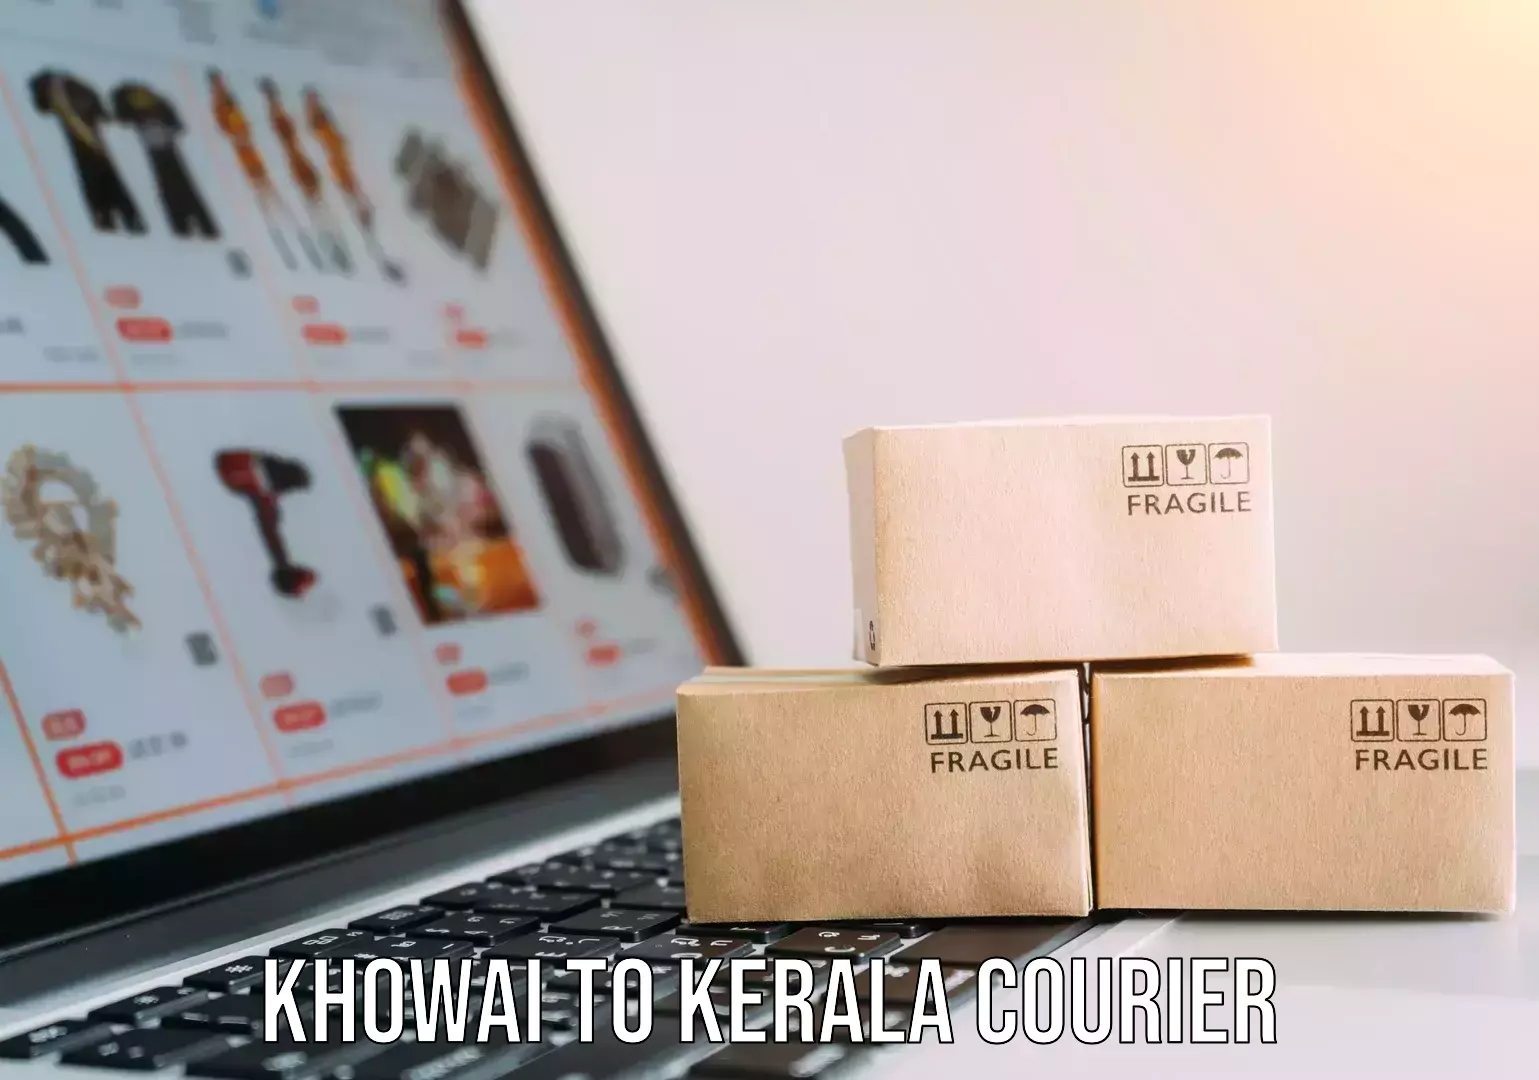 Shipping and handling Khowai to Kerala